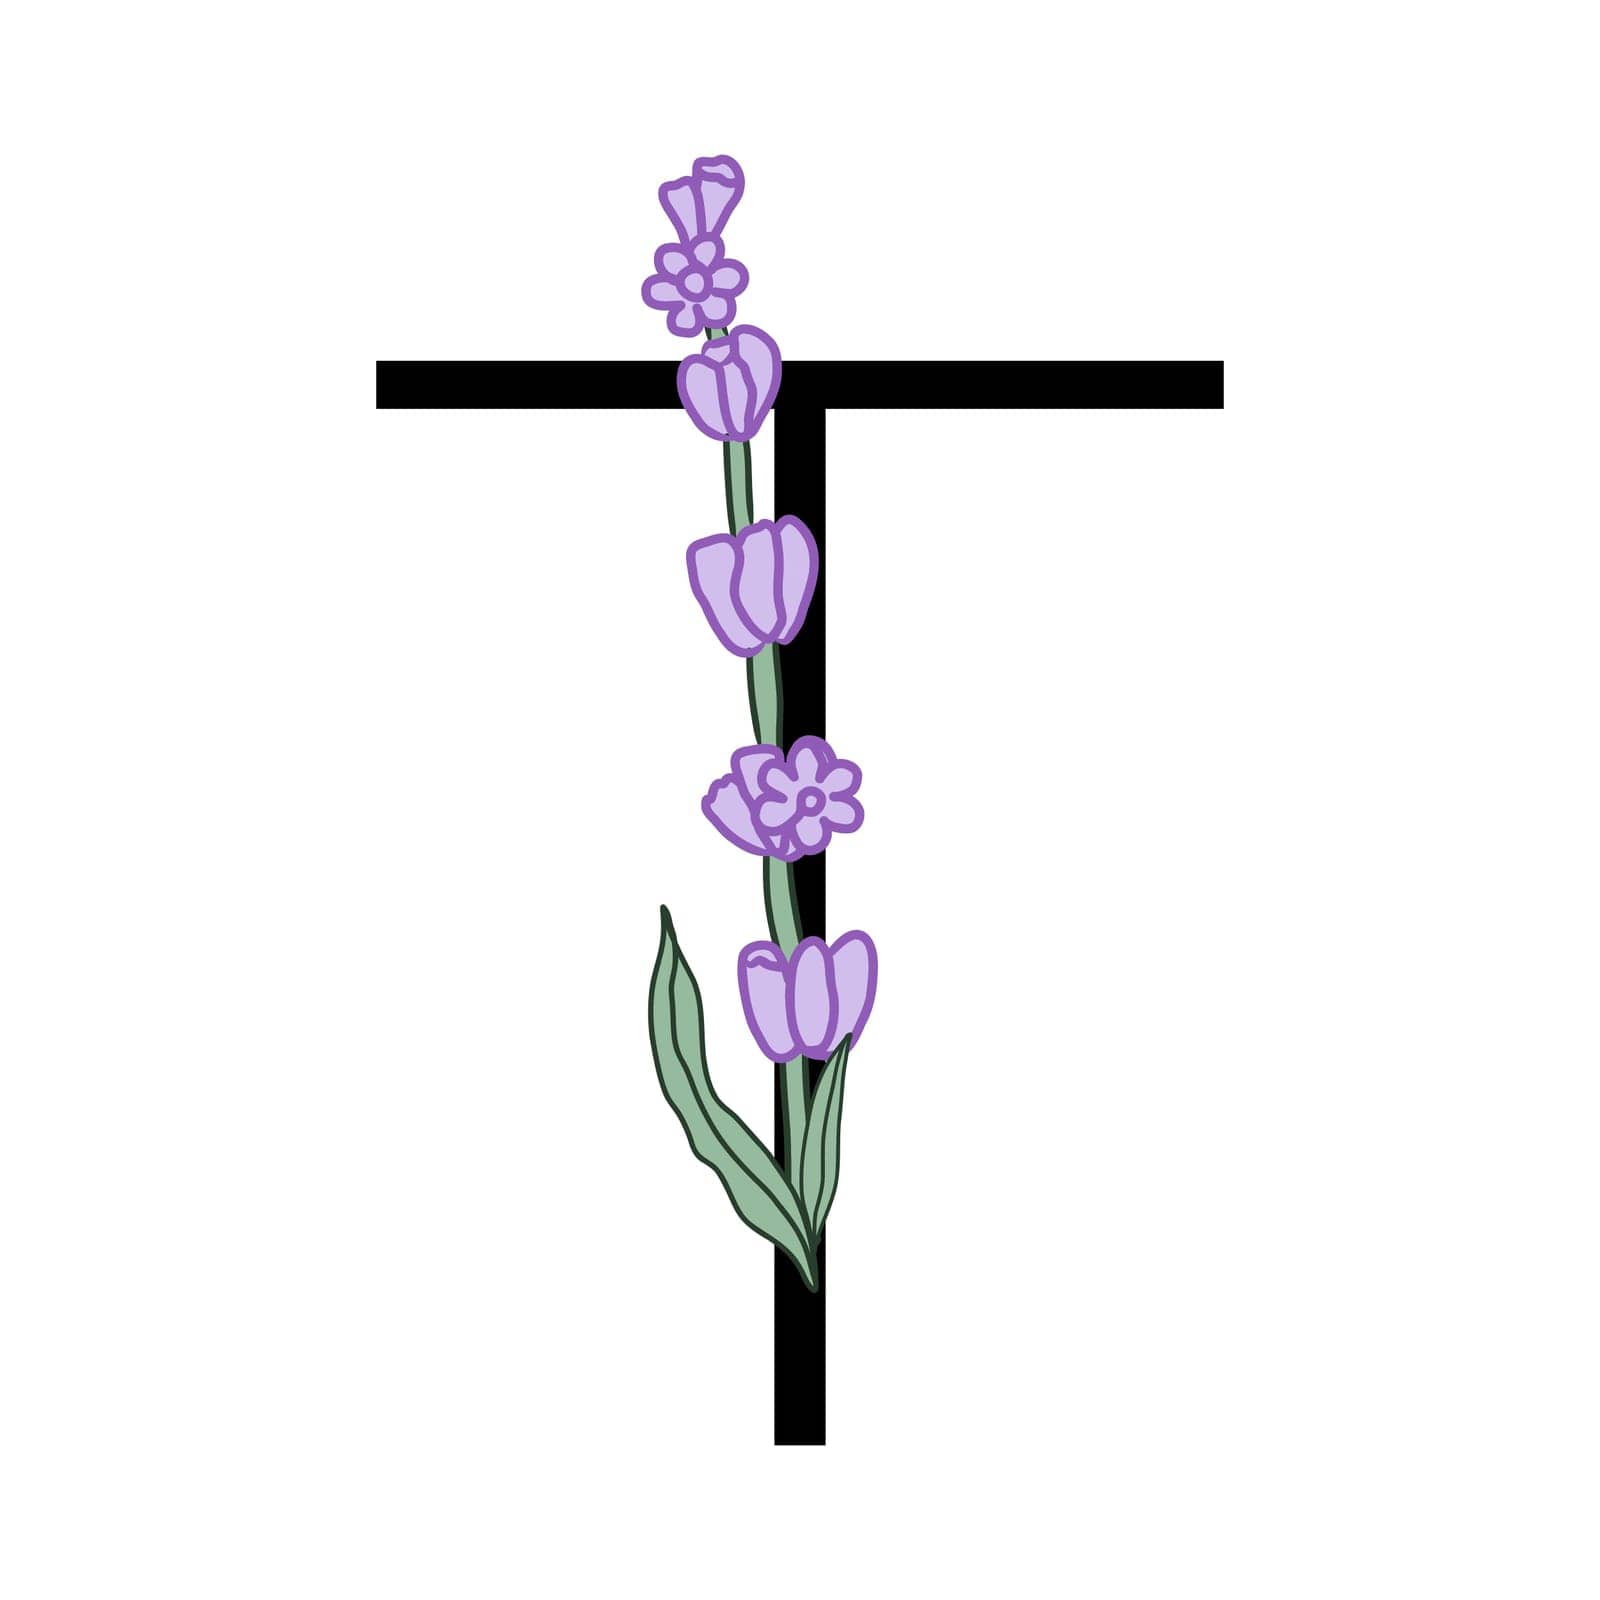 Lavender blossom violet little flower alphabet for design of card or invitation. Vector illustrations, isolated on white background for summer floral gesign.